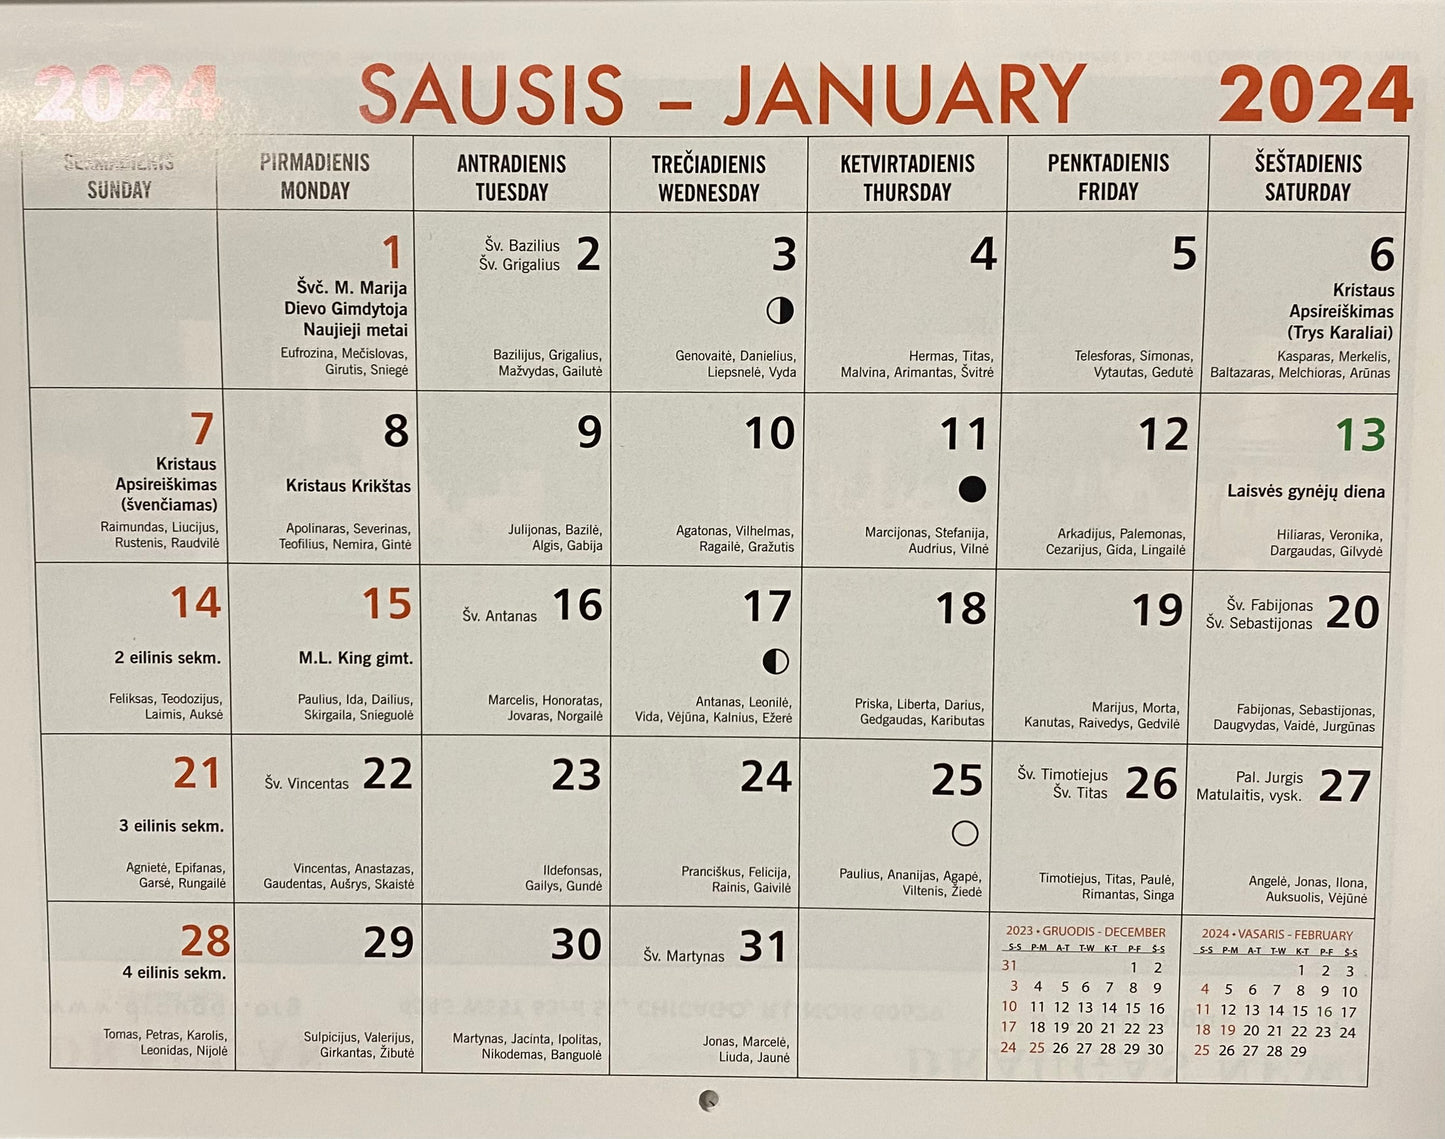 2024 Draugas News Wall Calendar (0004)